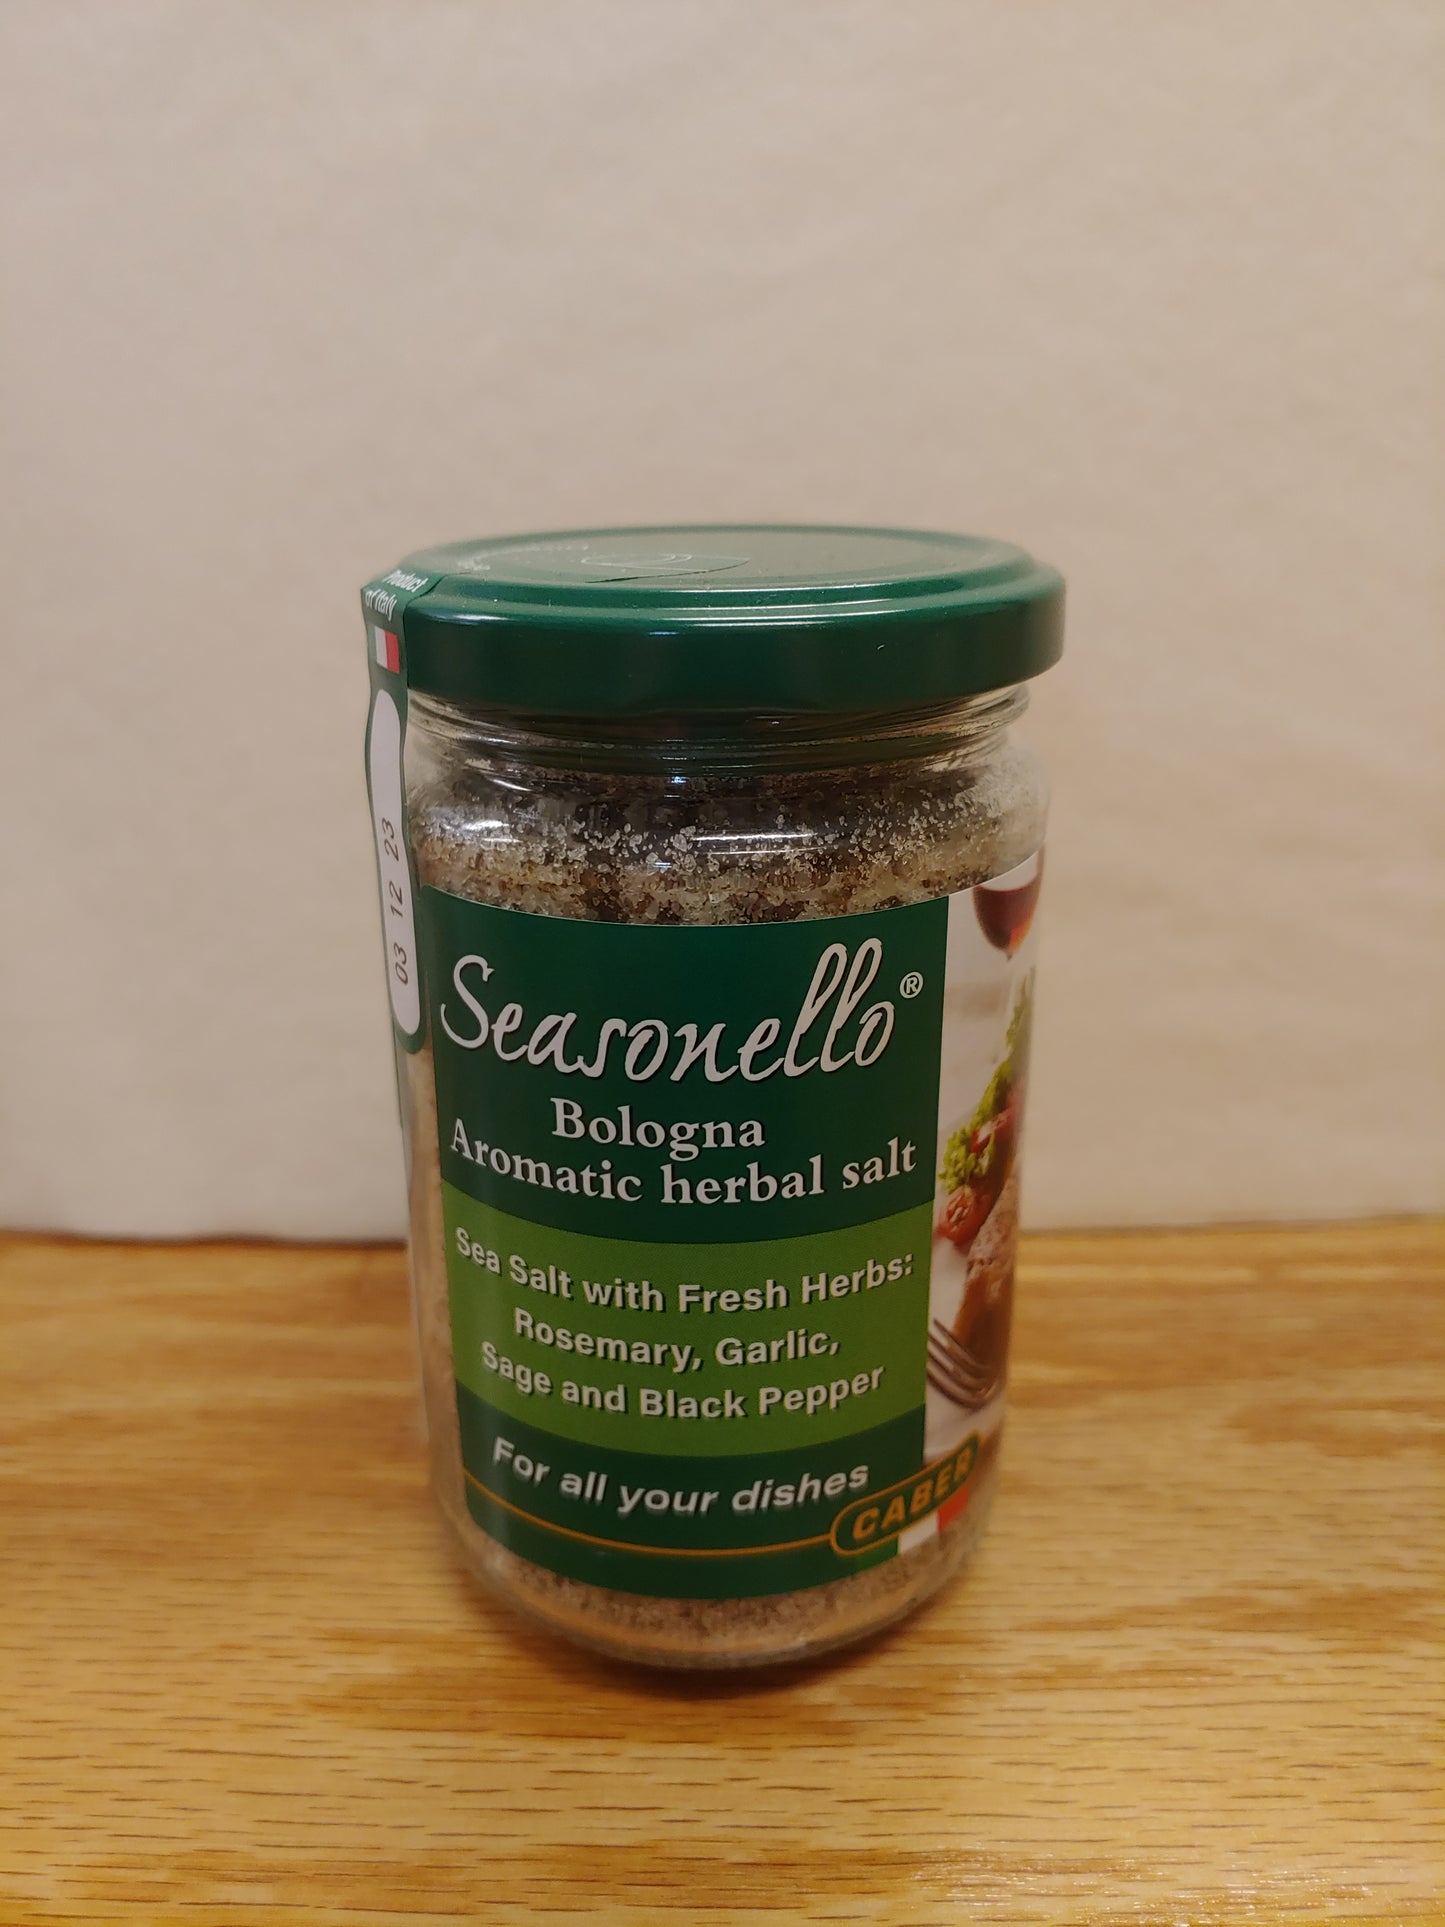 Seasonello Bologna Aromatic Herb Salt